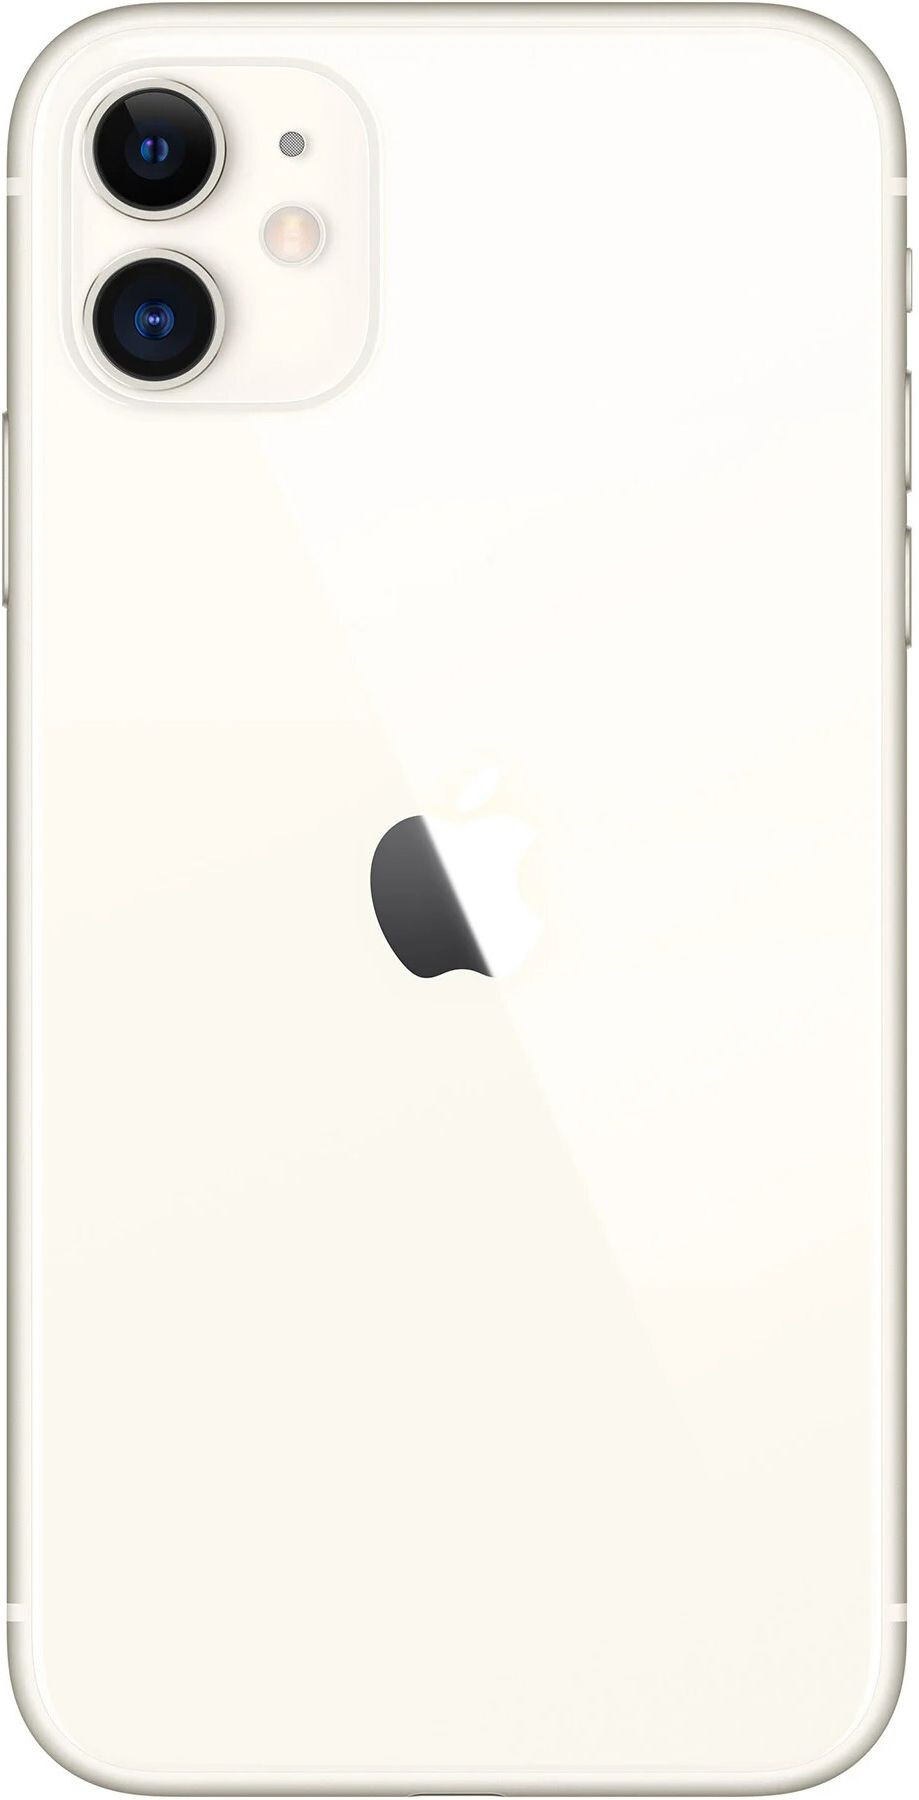  Apple iPhone 11 128GB White (MWLF2)